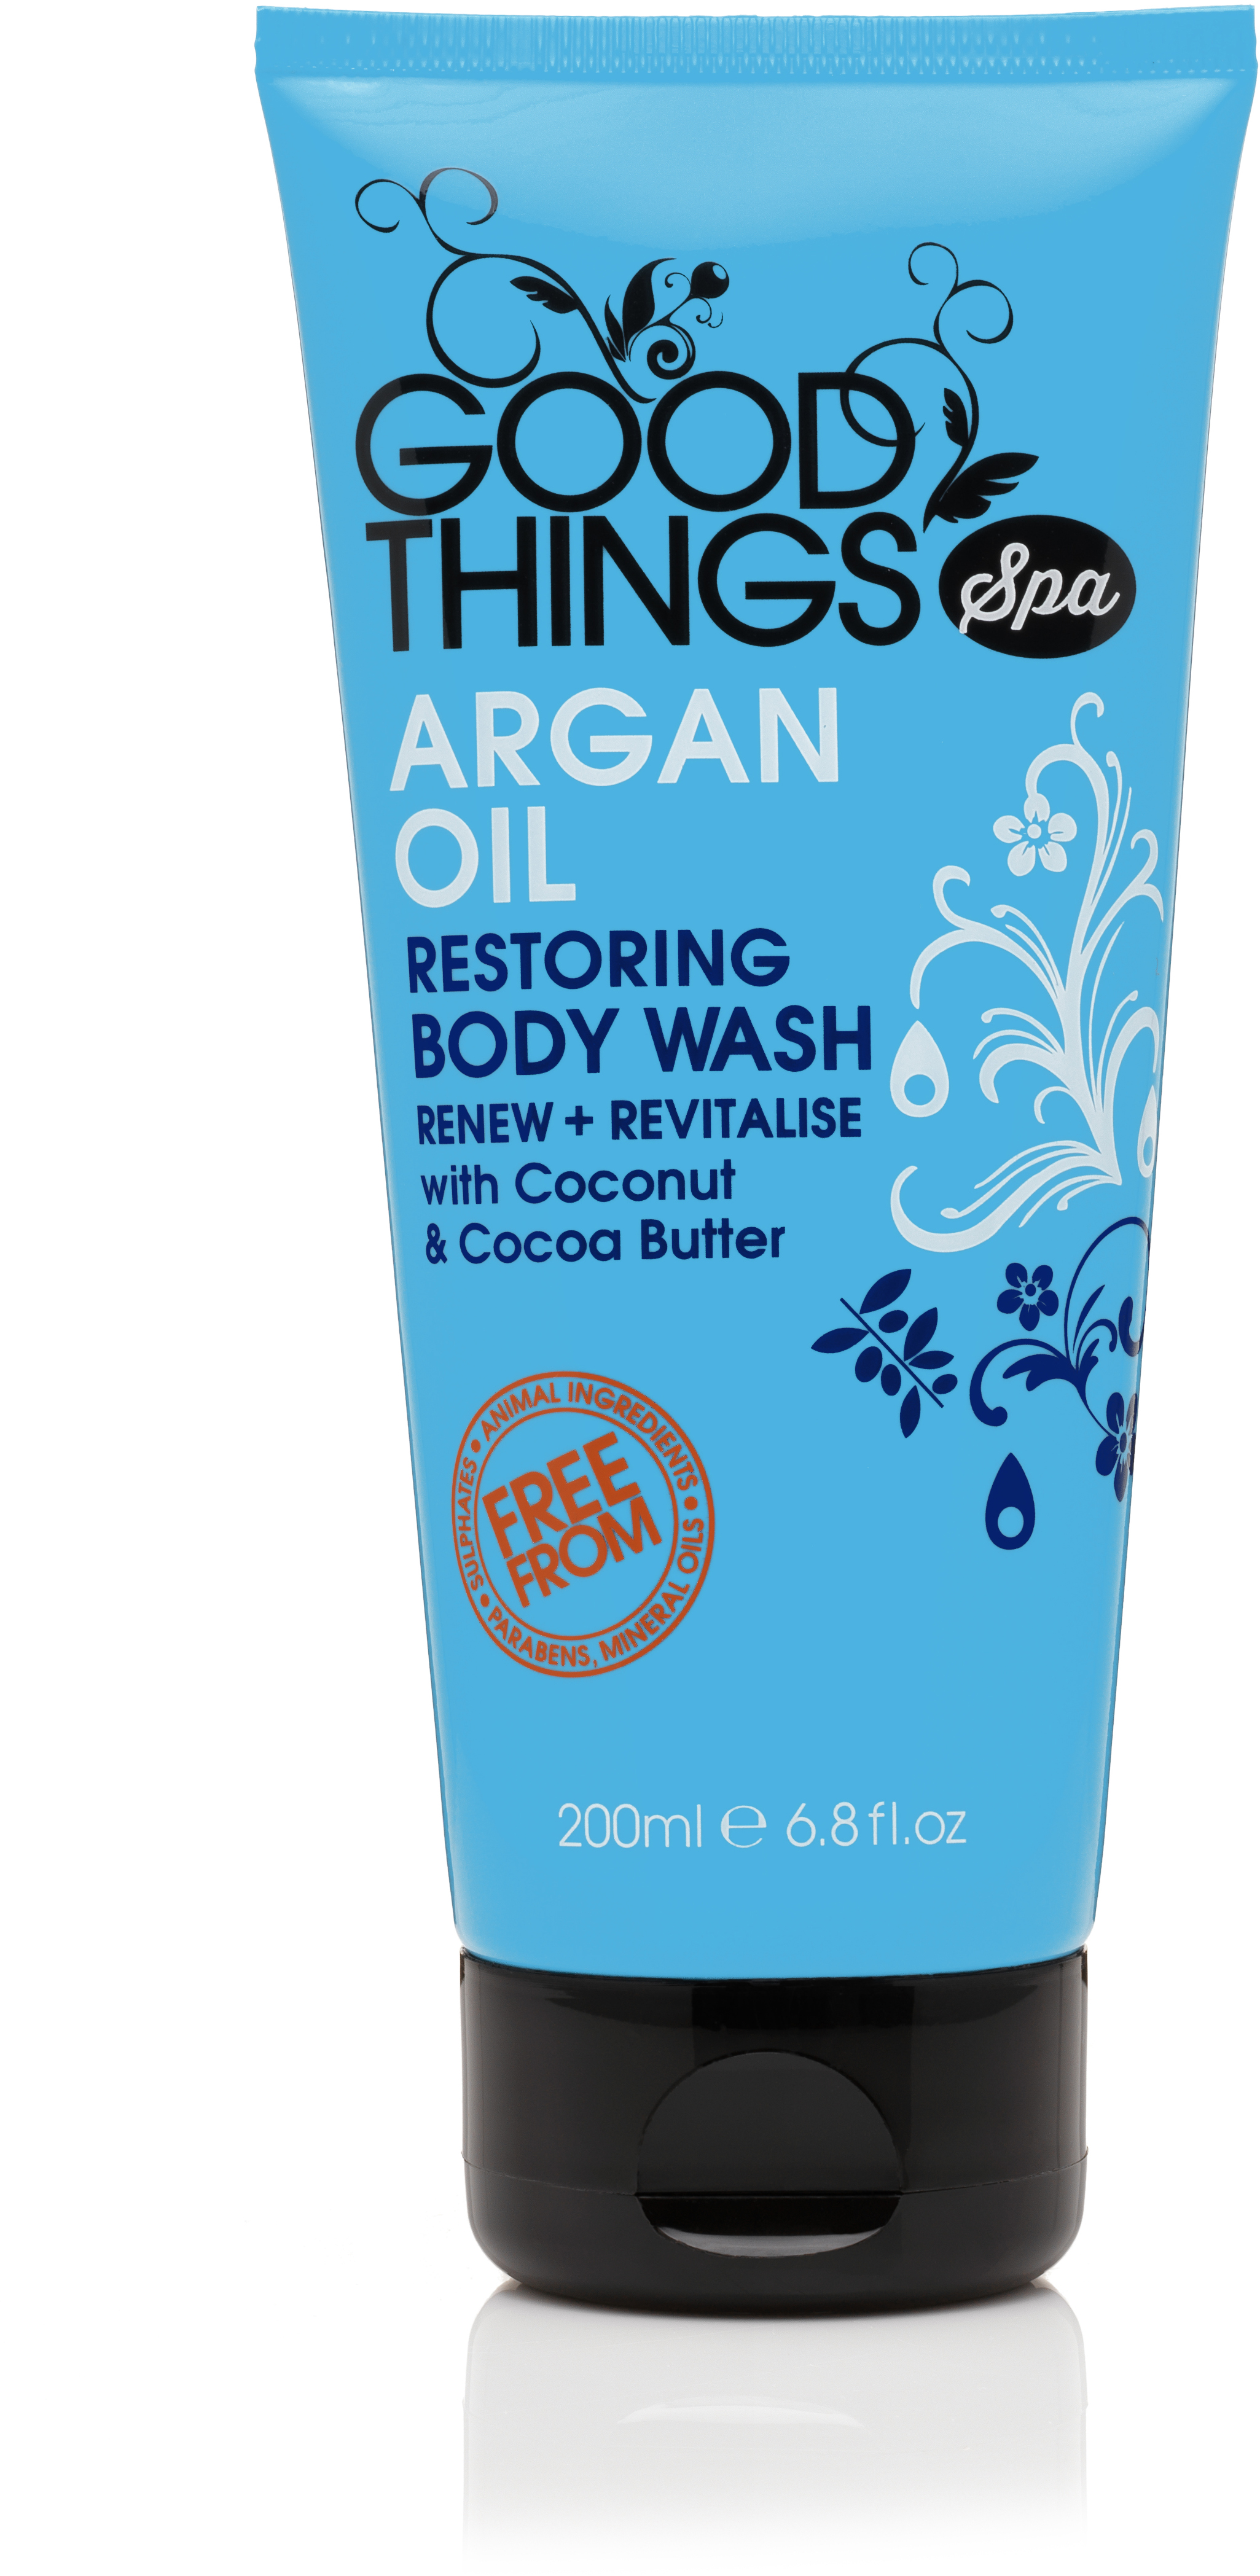 Good Things Argan Oil Restoring Body Wash 200ml